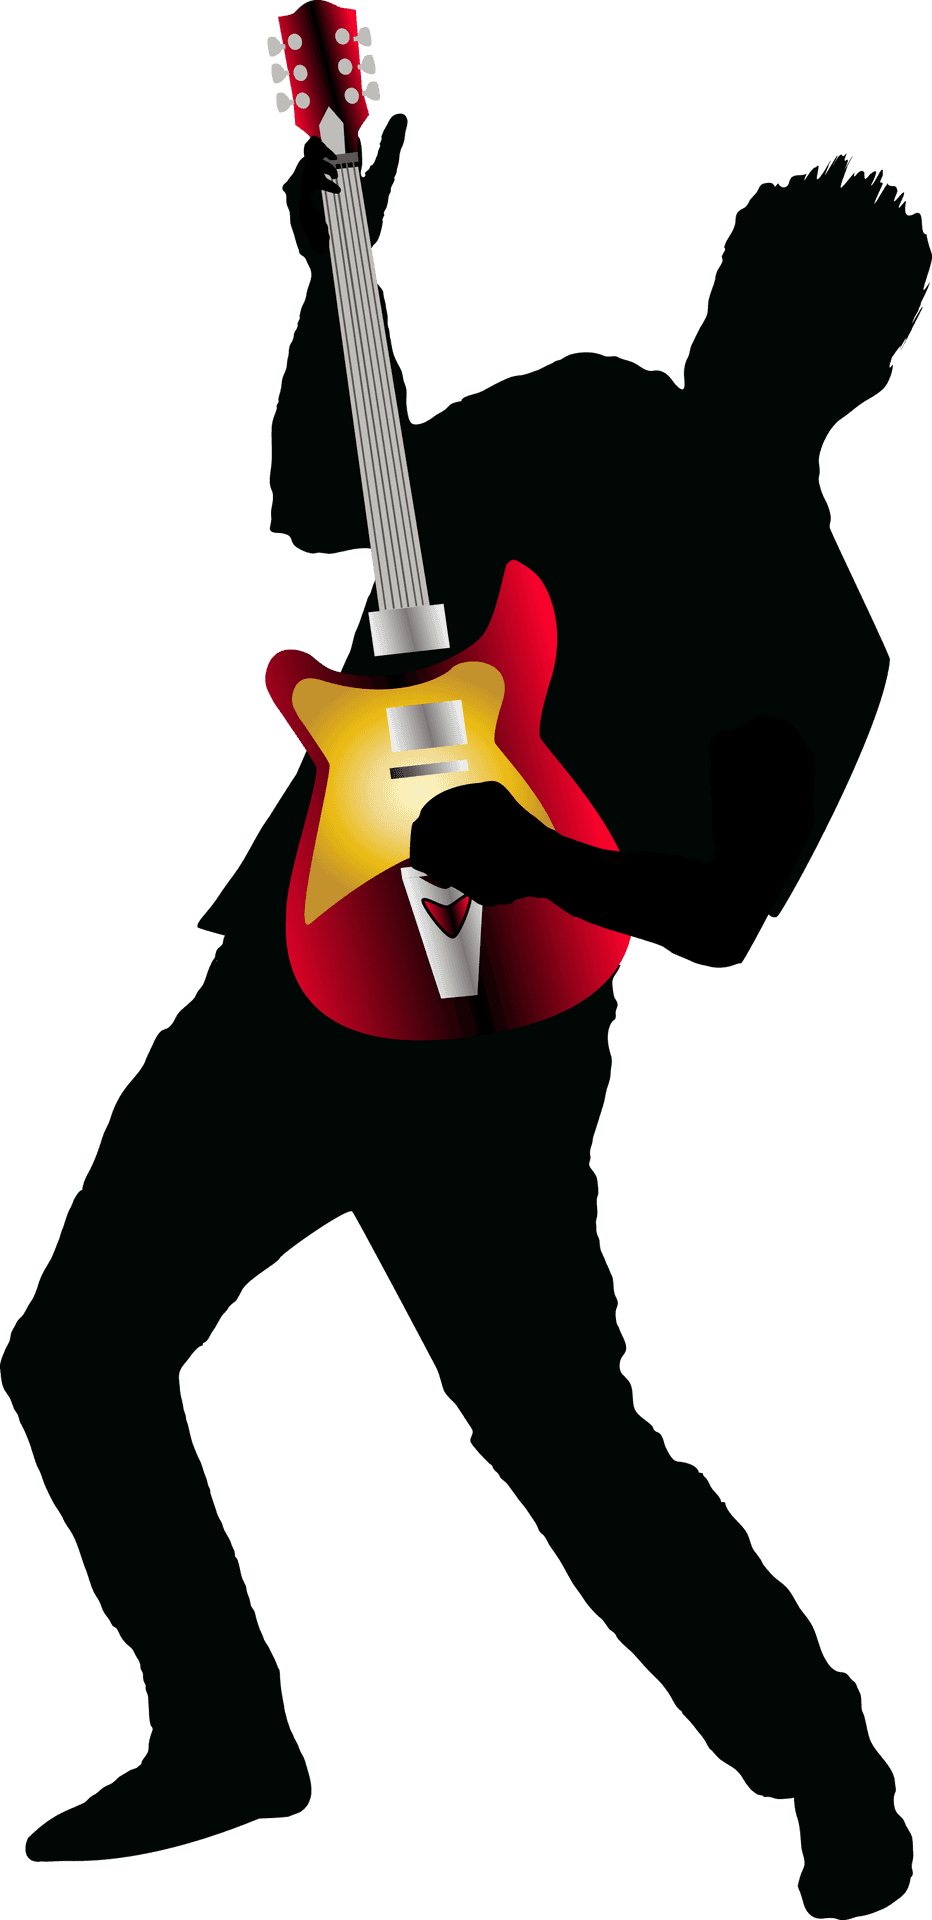 Rockstar Silhouette Guitarist.png PNG image